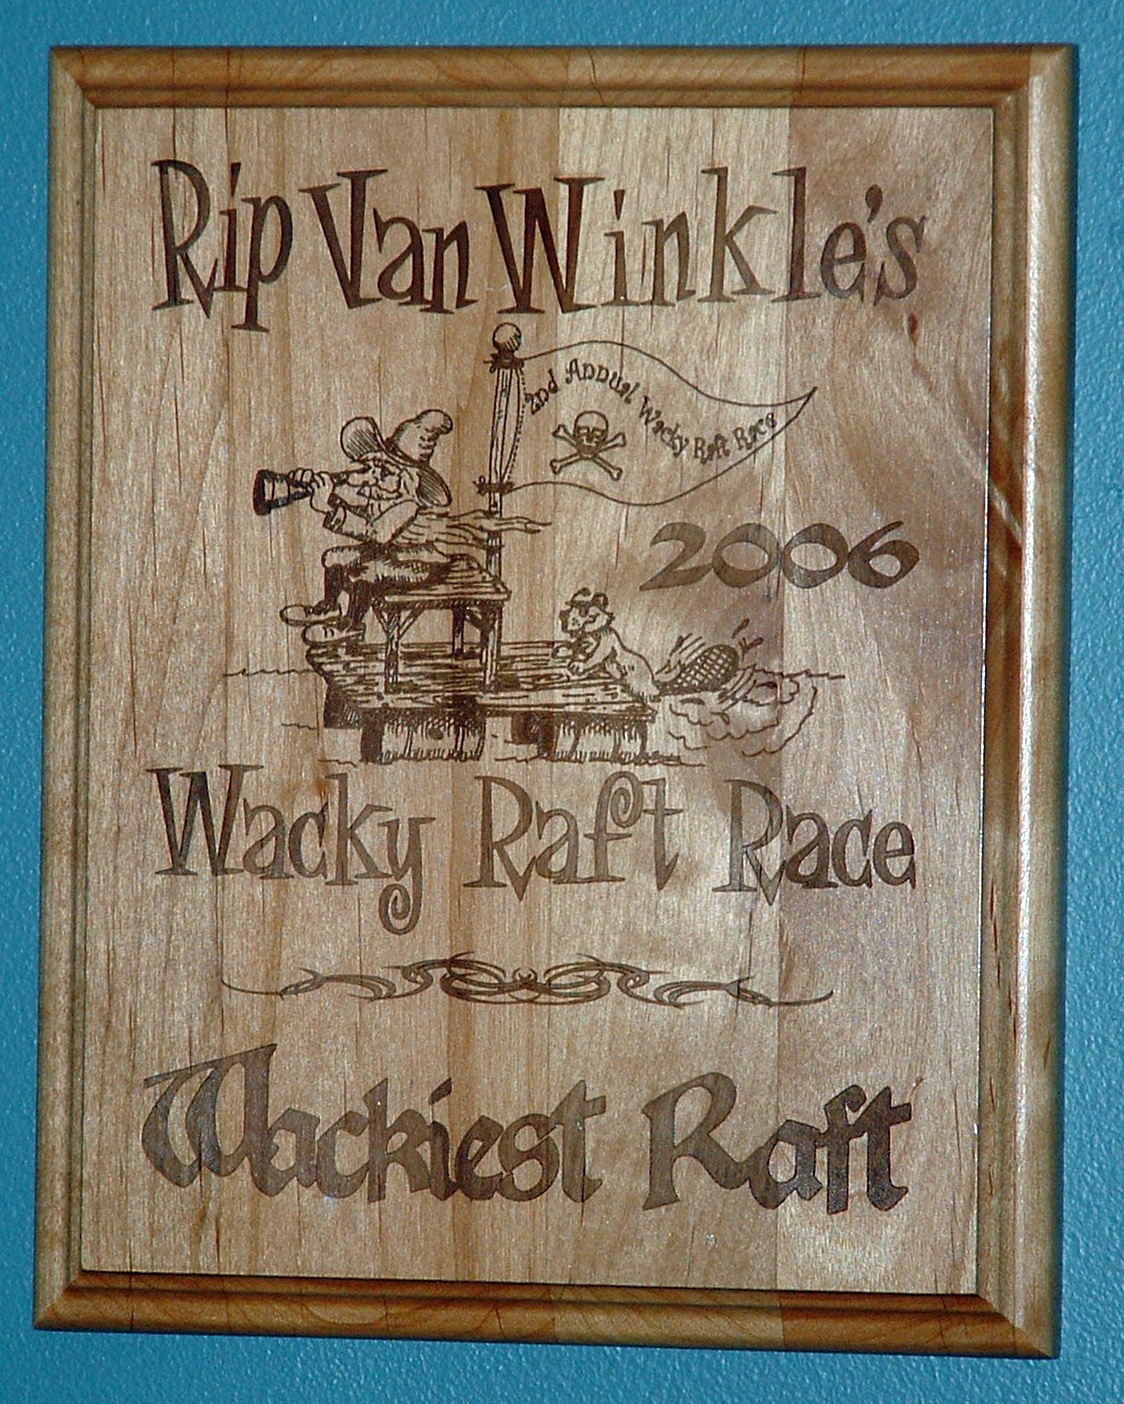 The Wackiest Raft award